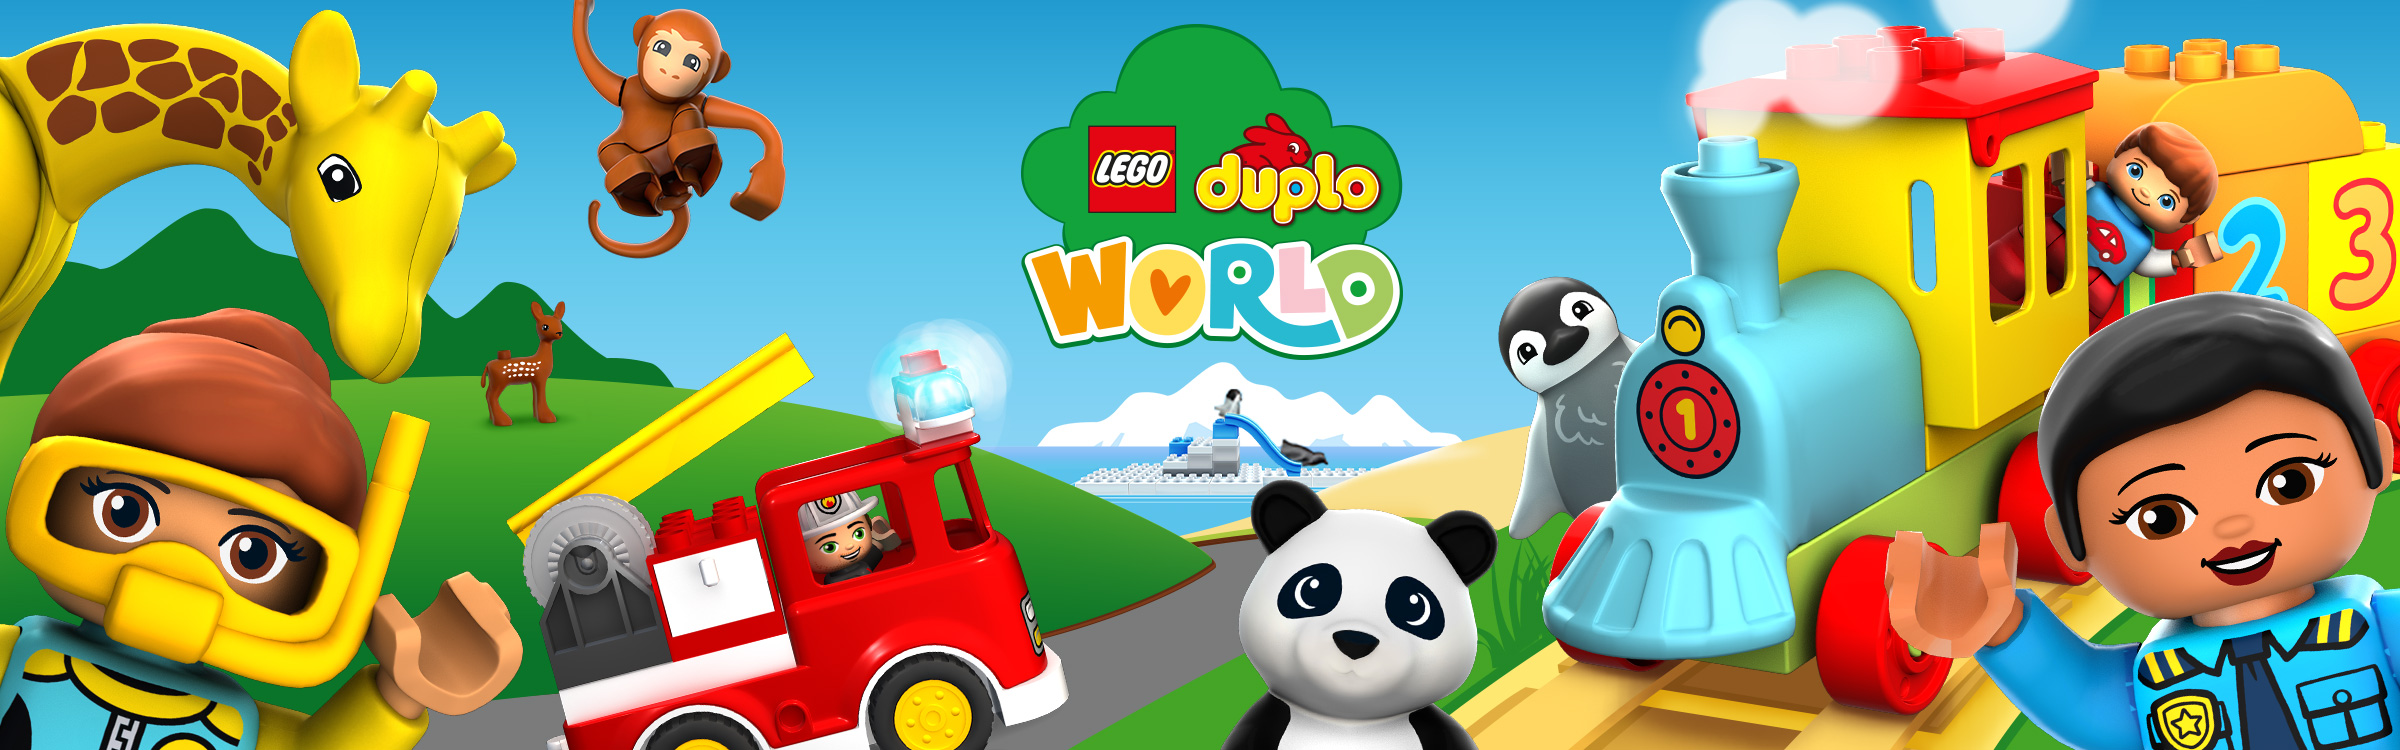 LEGO® DUPLO® WORLD | Games | Apps 